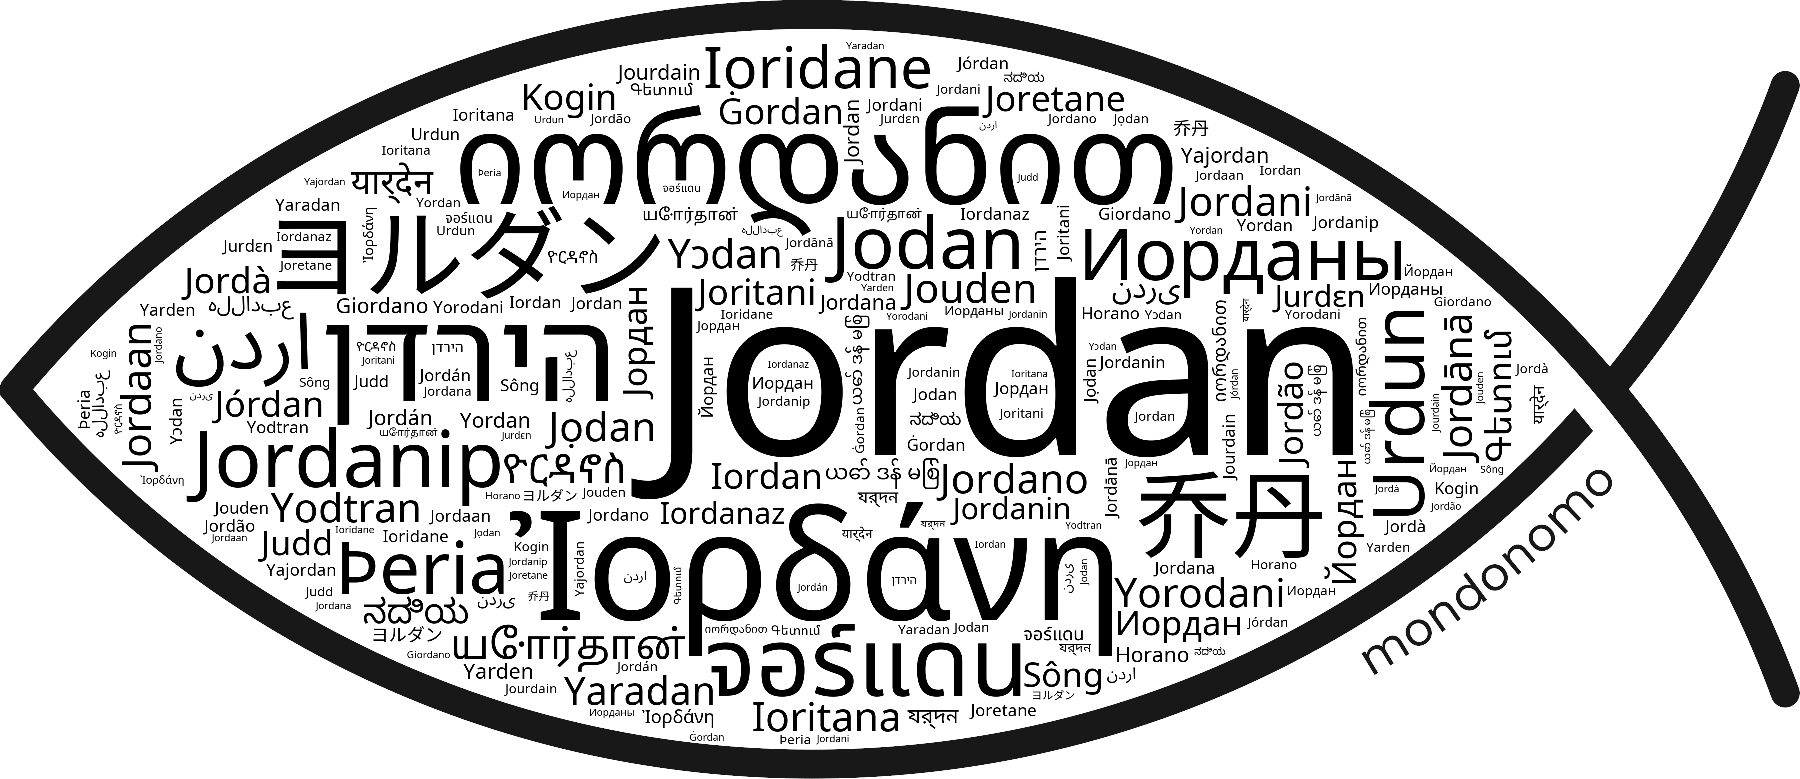 Name Jordan in the world's Bibles